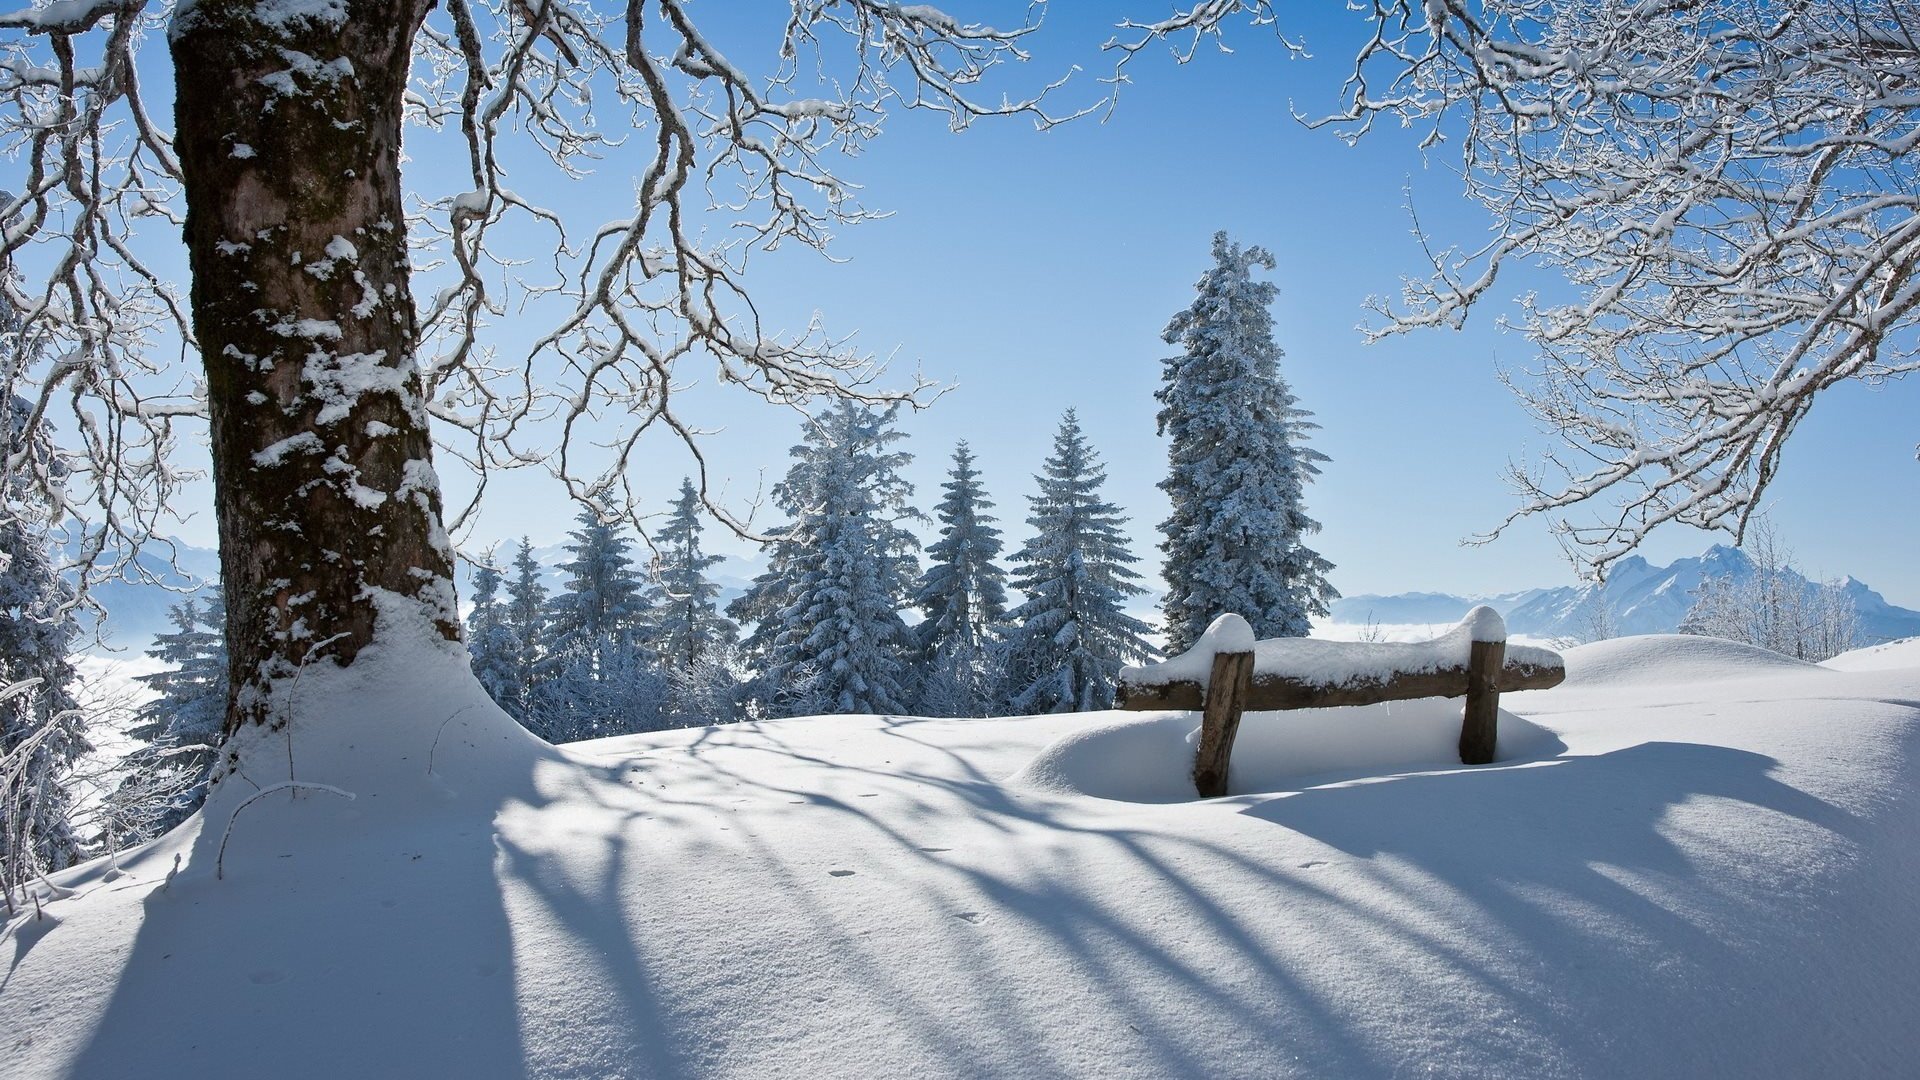 Winter Season Wallpaper - Snow Nature Background - 1920x1080 Wallpaper -  